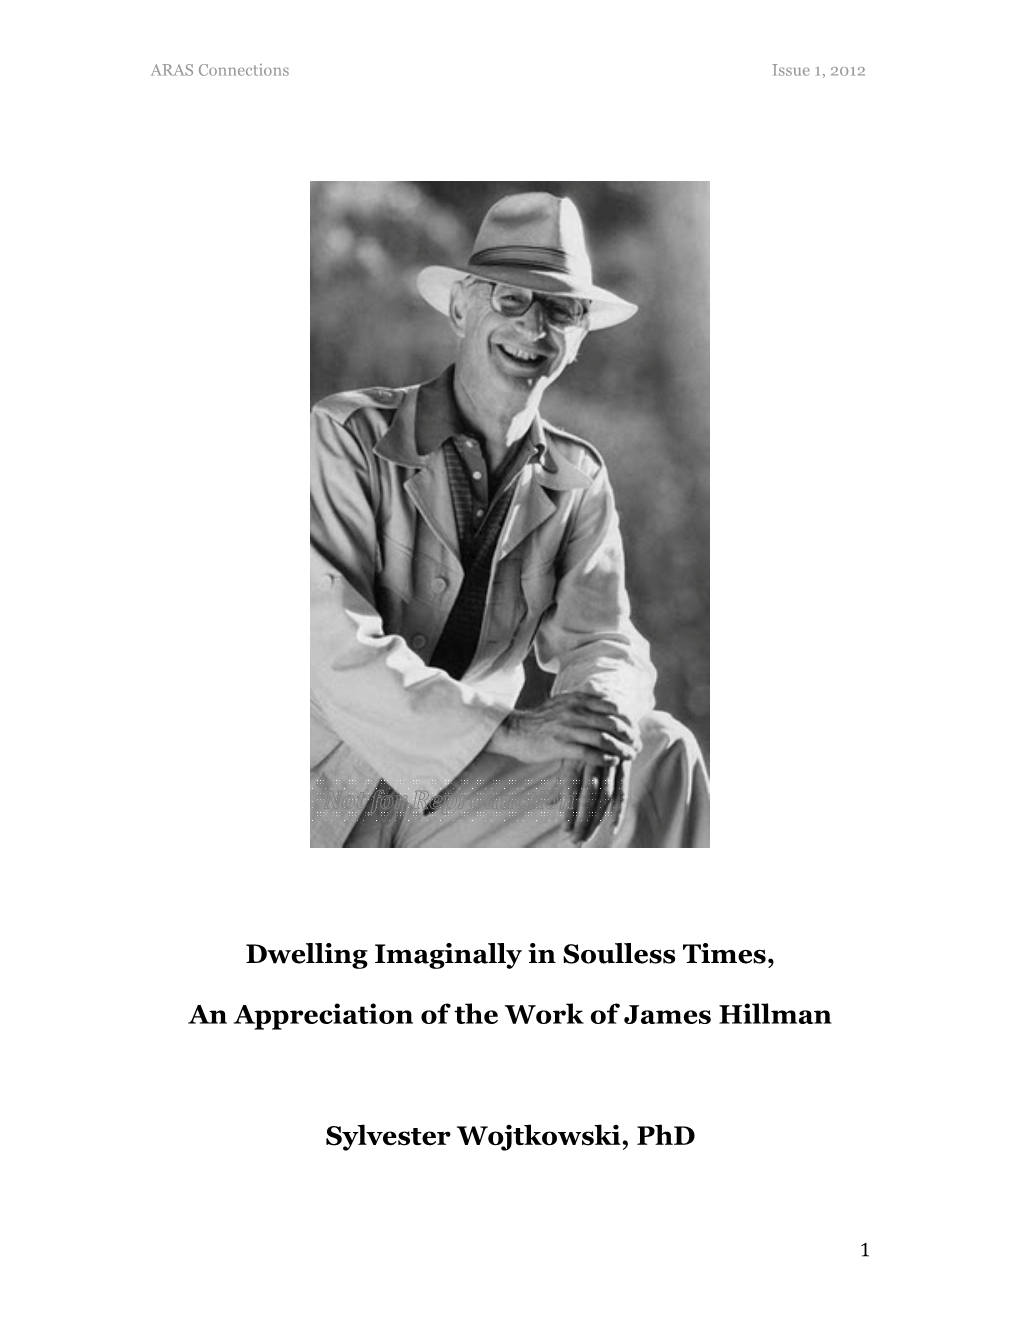 Dwelling Imaginally in Soulless Times, an Appreciation of the Work of James Hillman Sylvester Wojtkowski